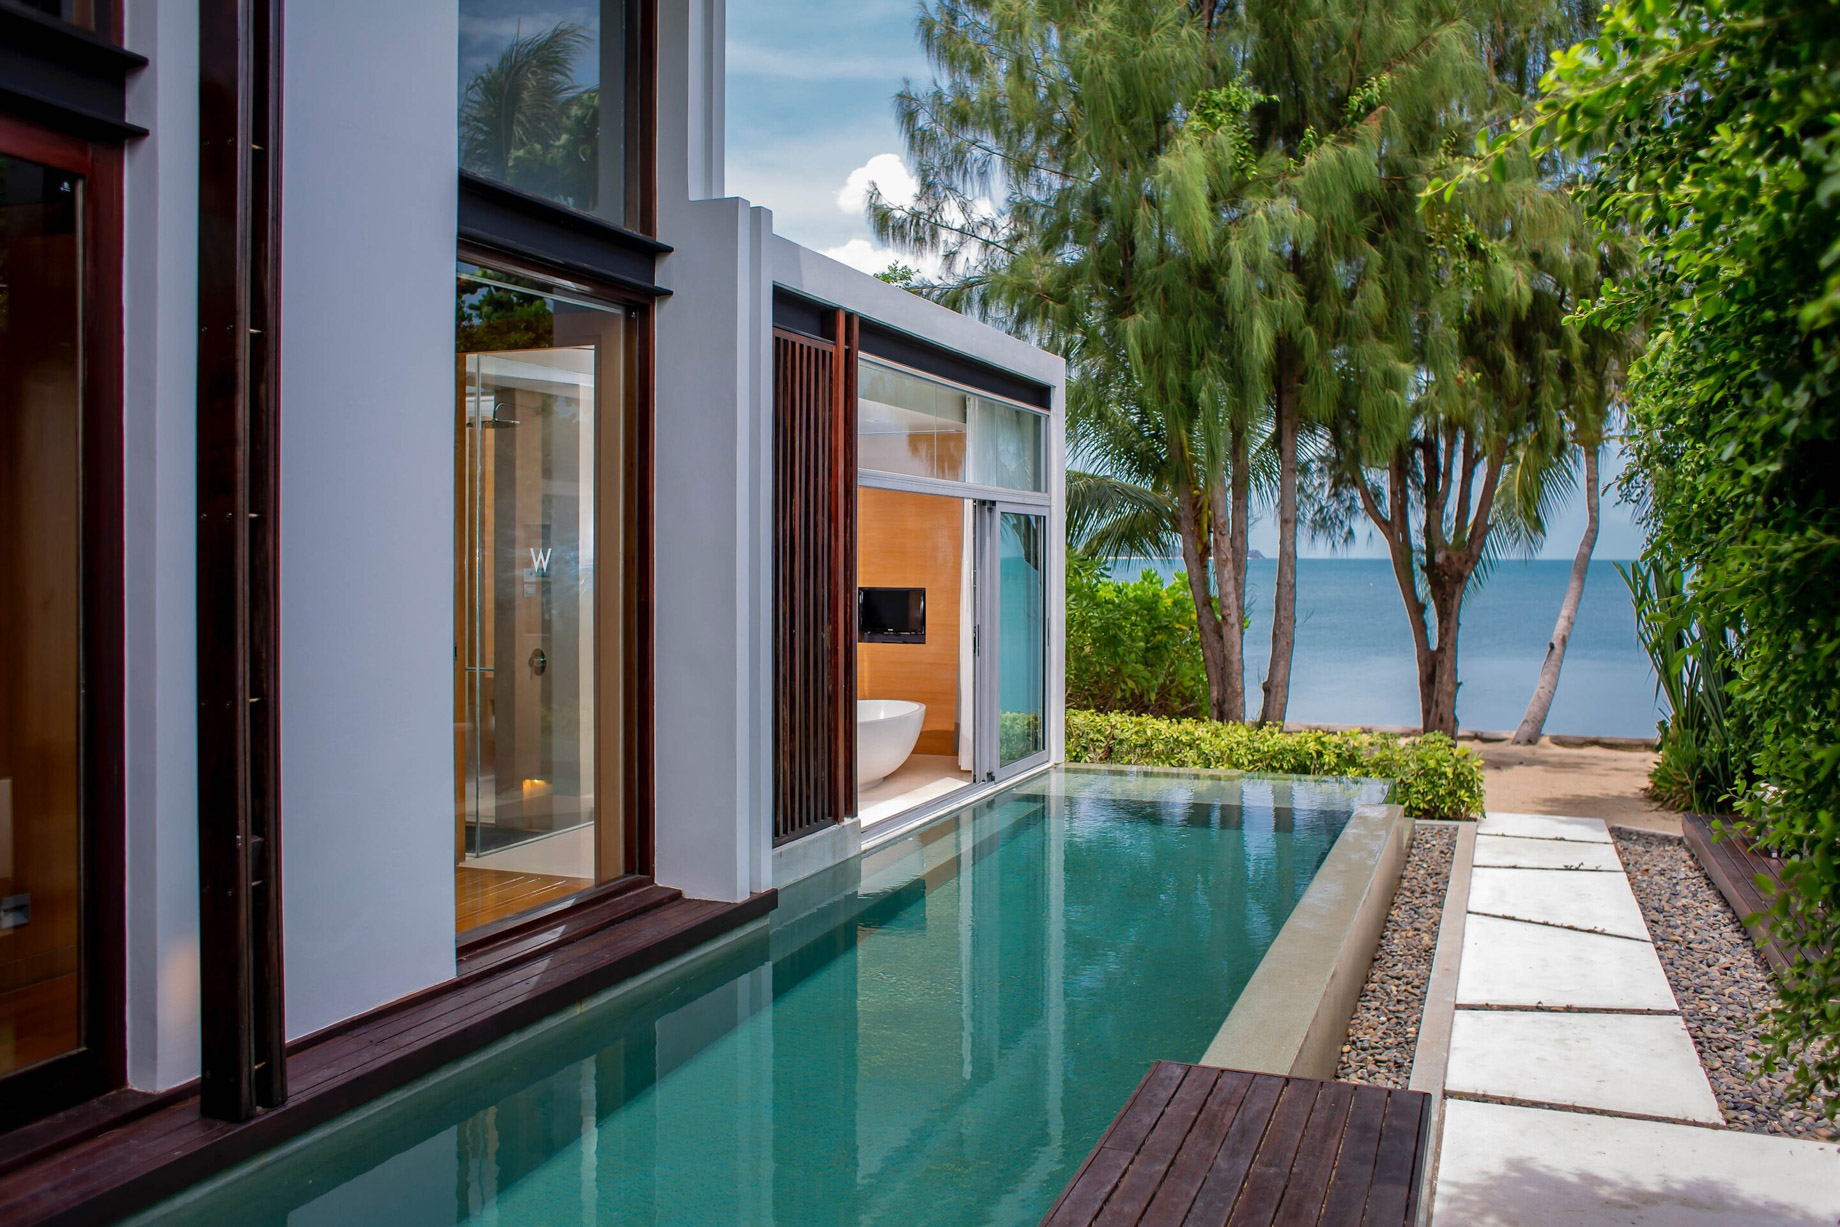 W Koh Samui Resort – Thailand – Ocean Front Haven Villa Pool View